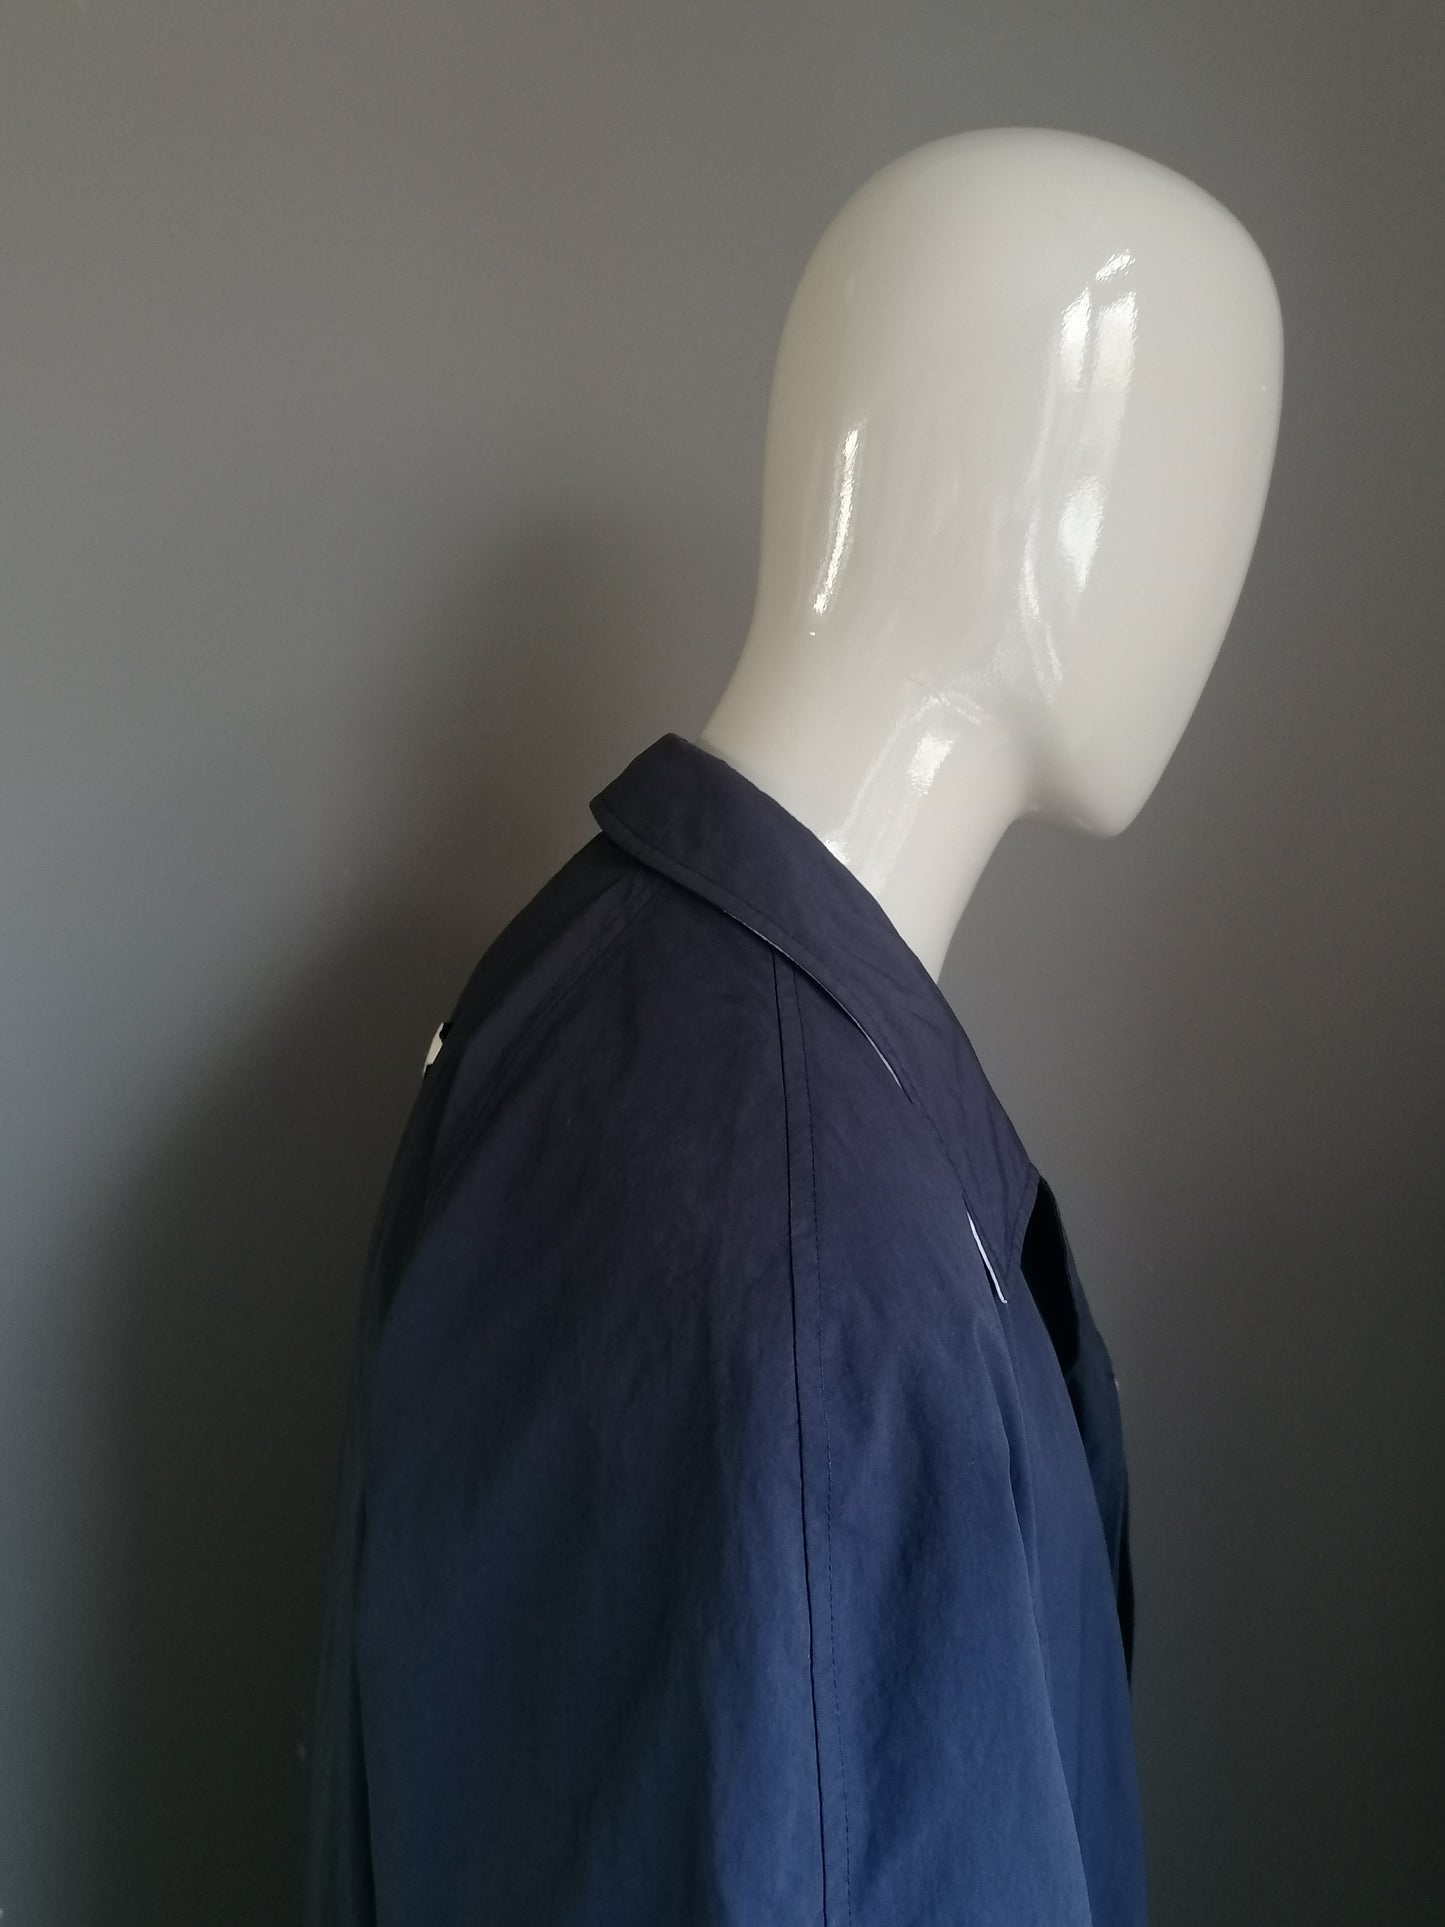 Manderley Mantel / Half -length Jacket. Dark blue colored. Size 98 / XL. (58/60)